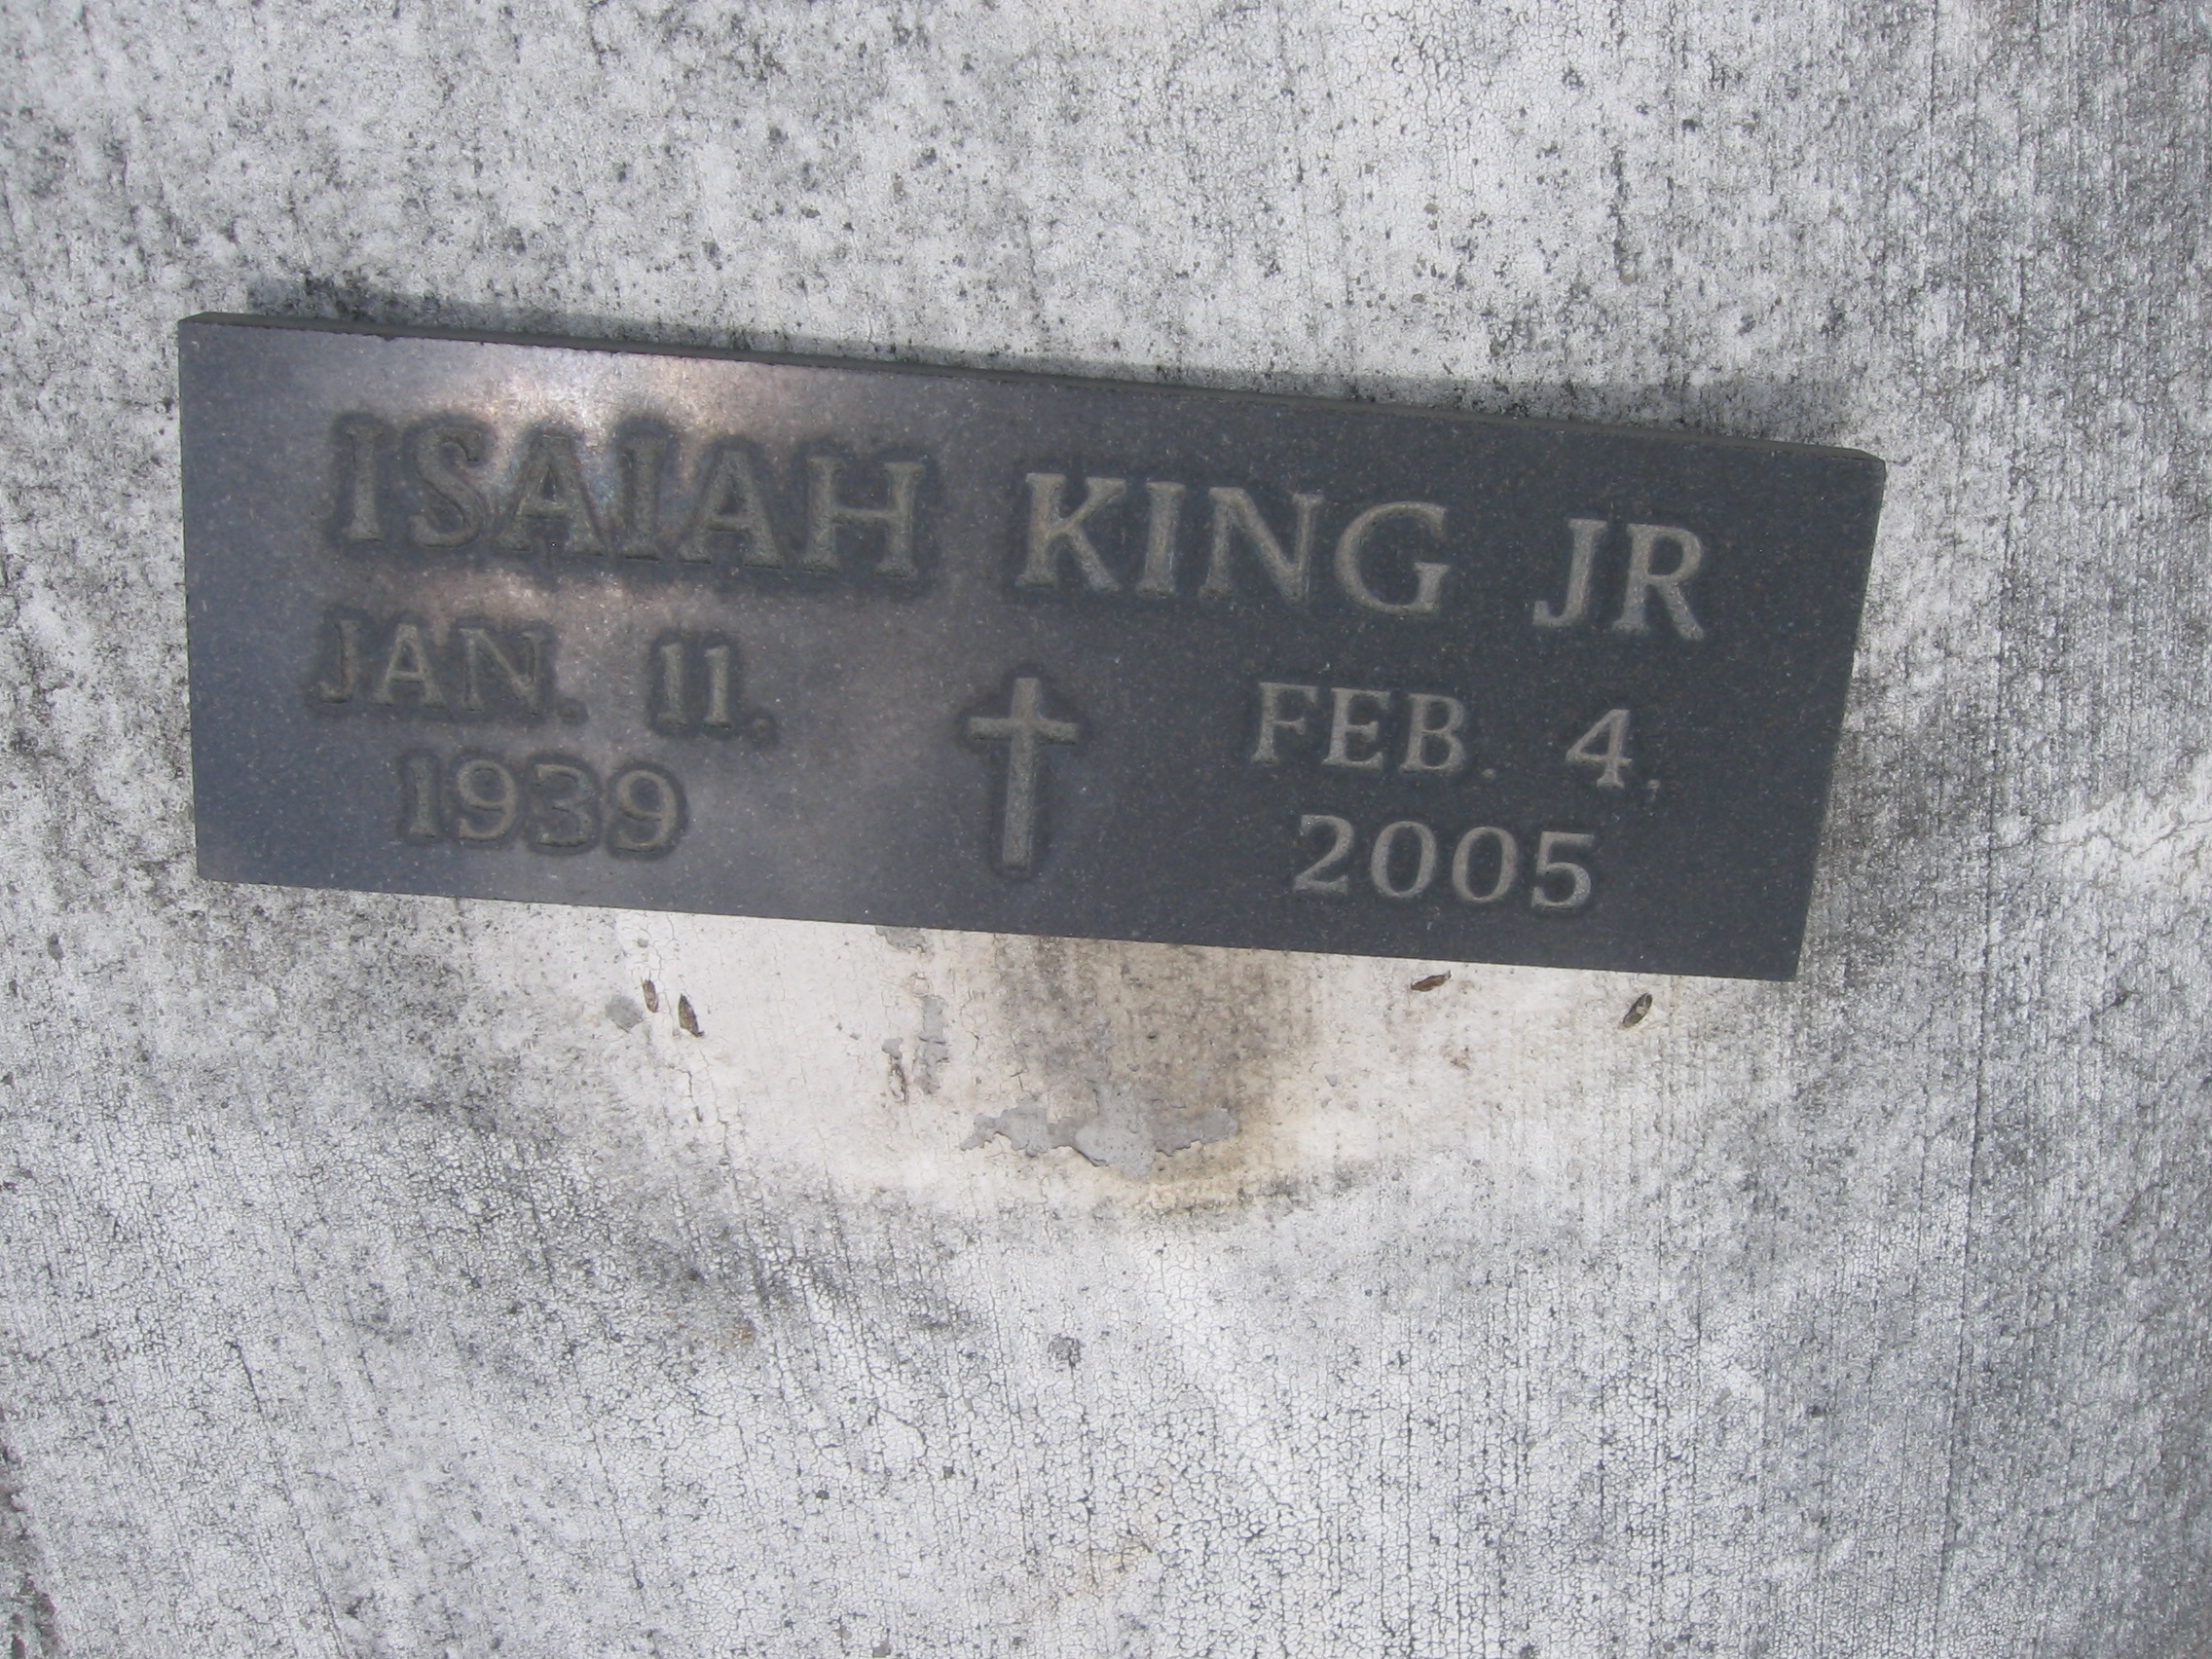 Isaiah King, Jr